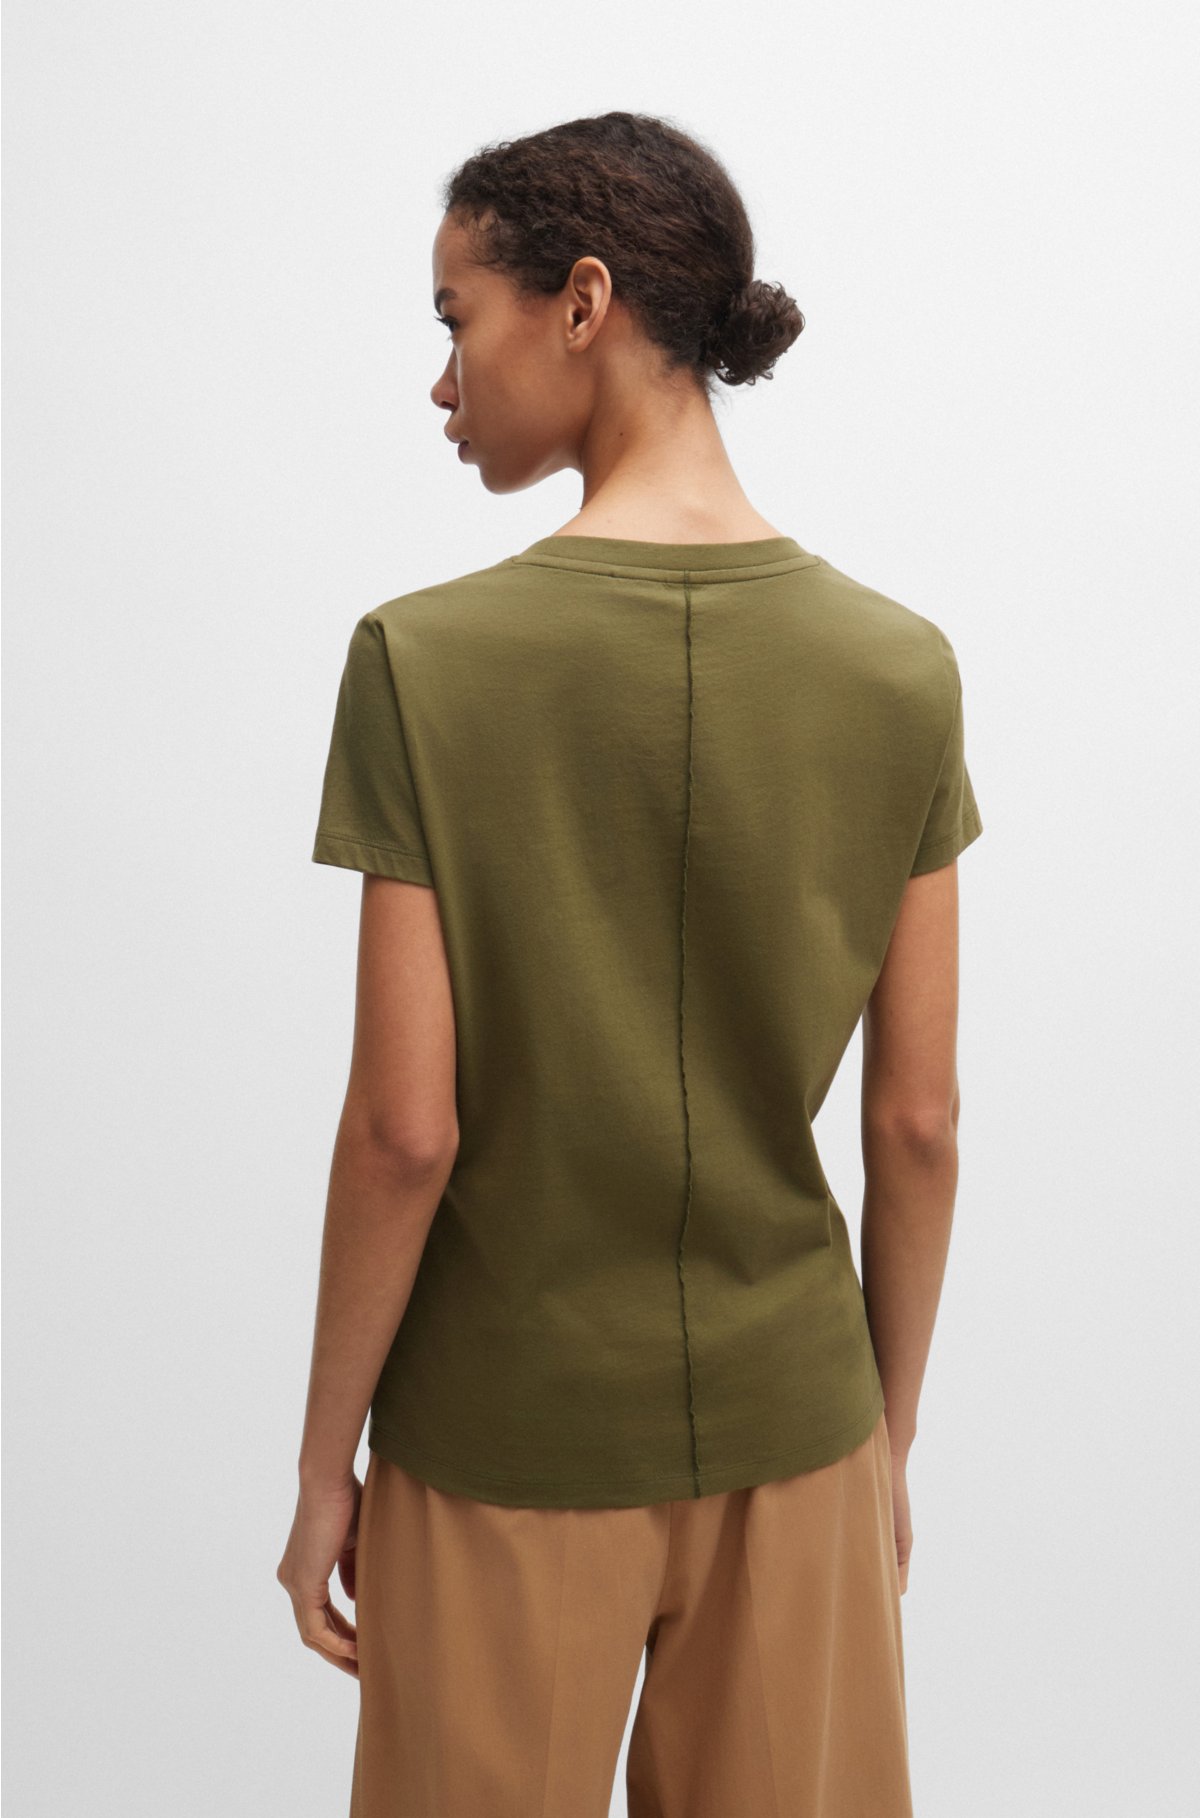 Cotton-jersey slim-fit T-shirt with logo detail, Dark Green